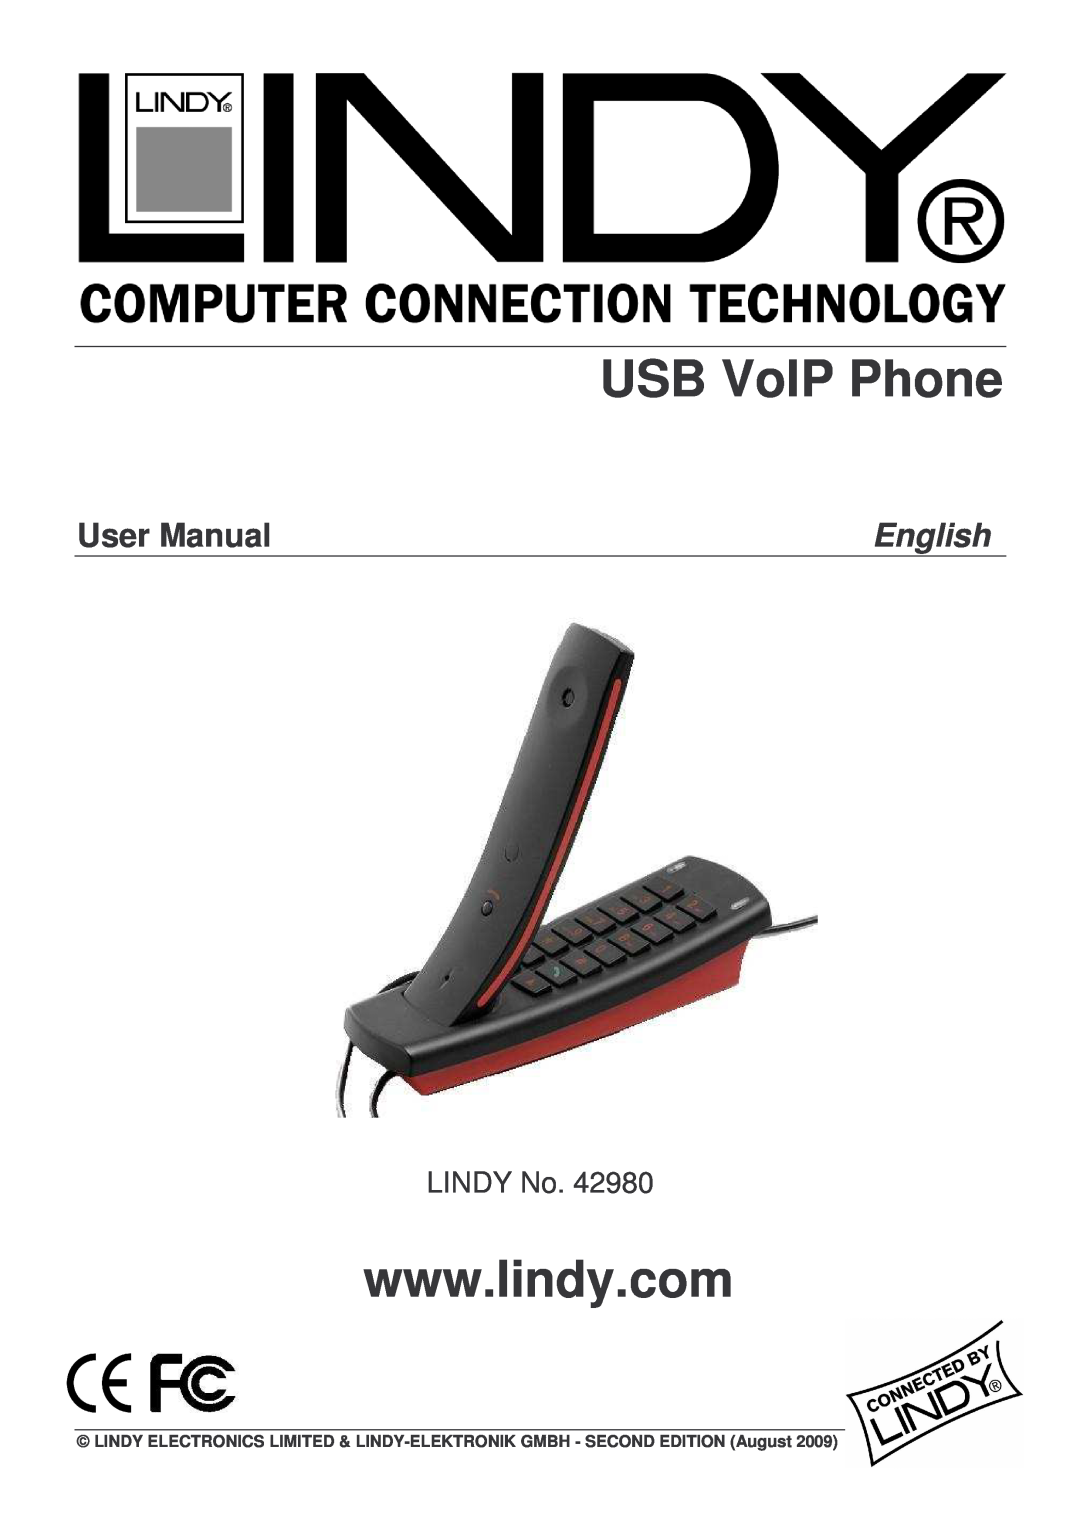 Lindy 42980 user manual USB VoIP Phone, User Manual, English, LINDY No 